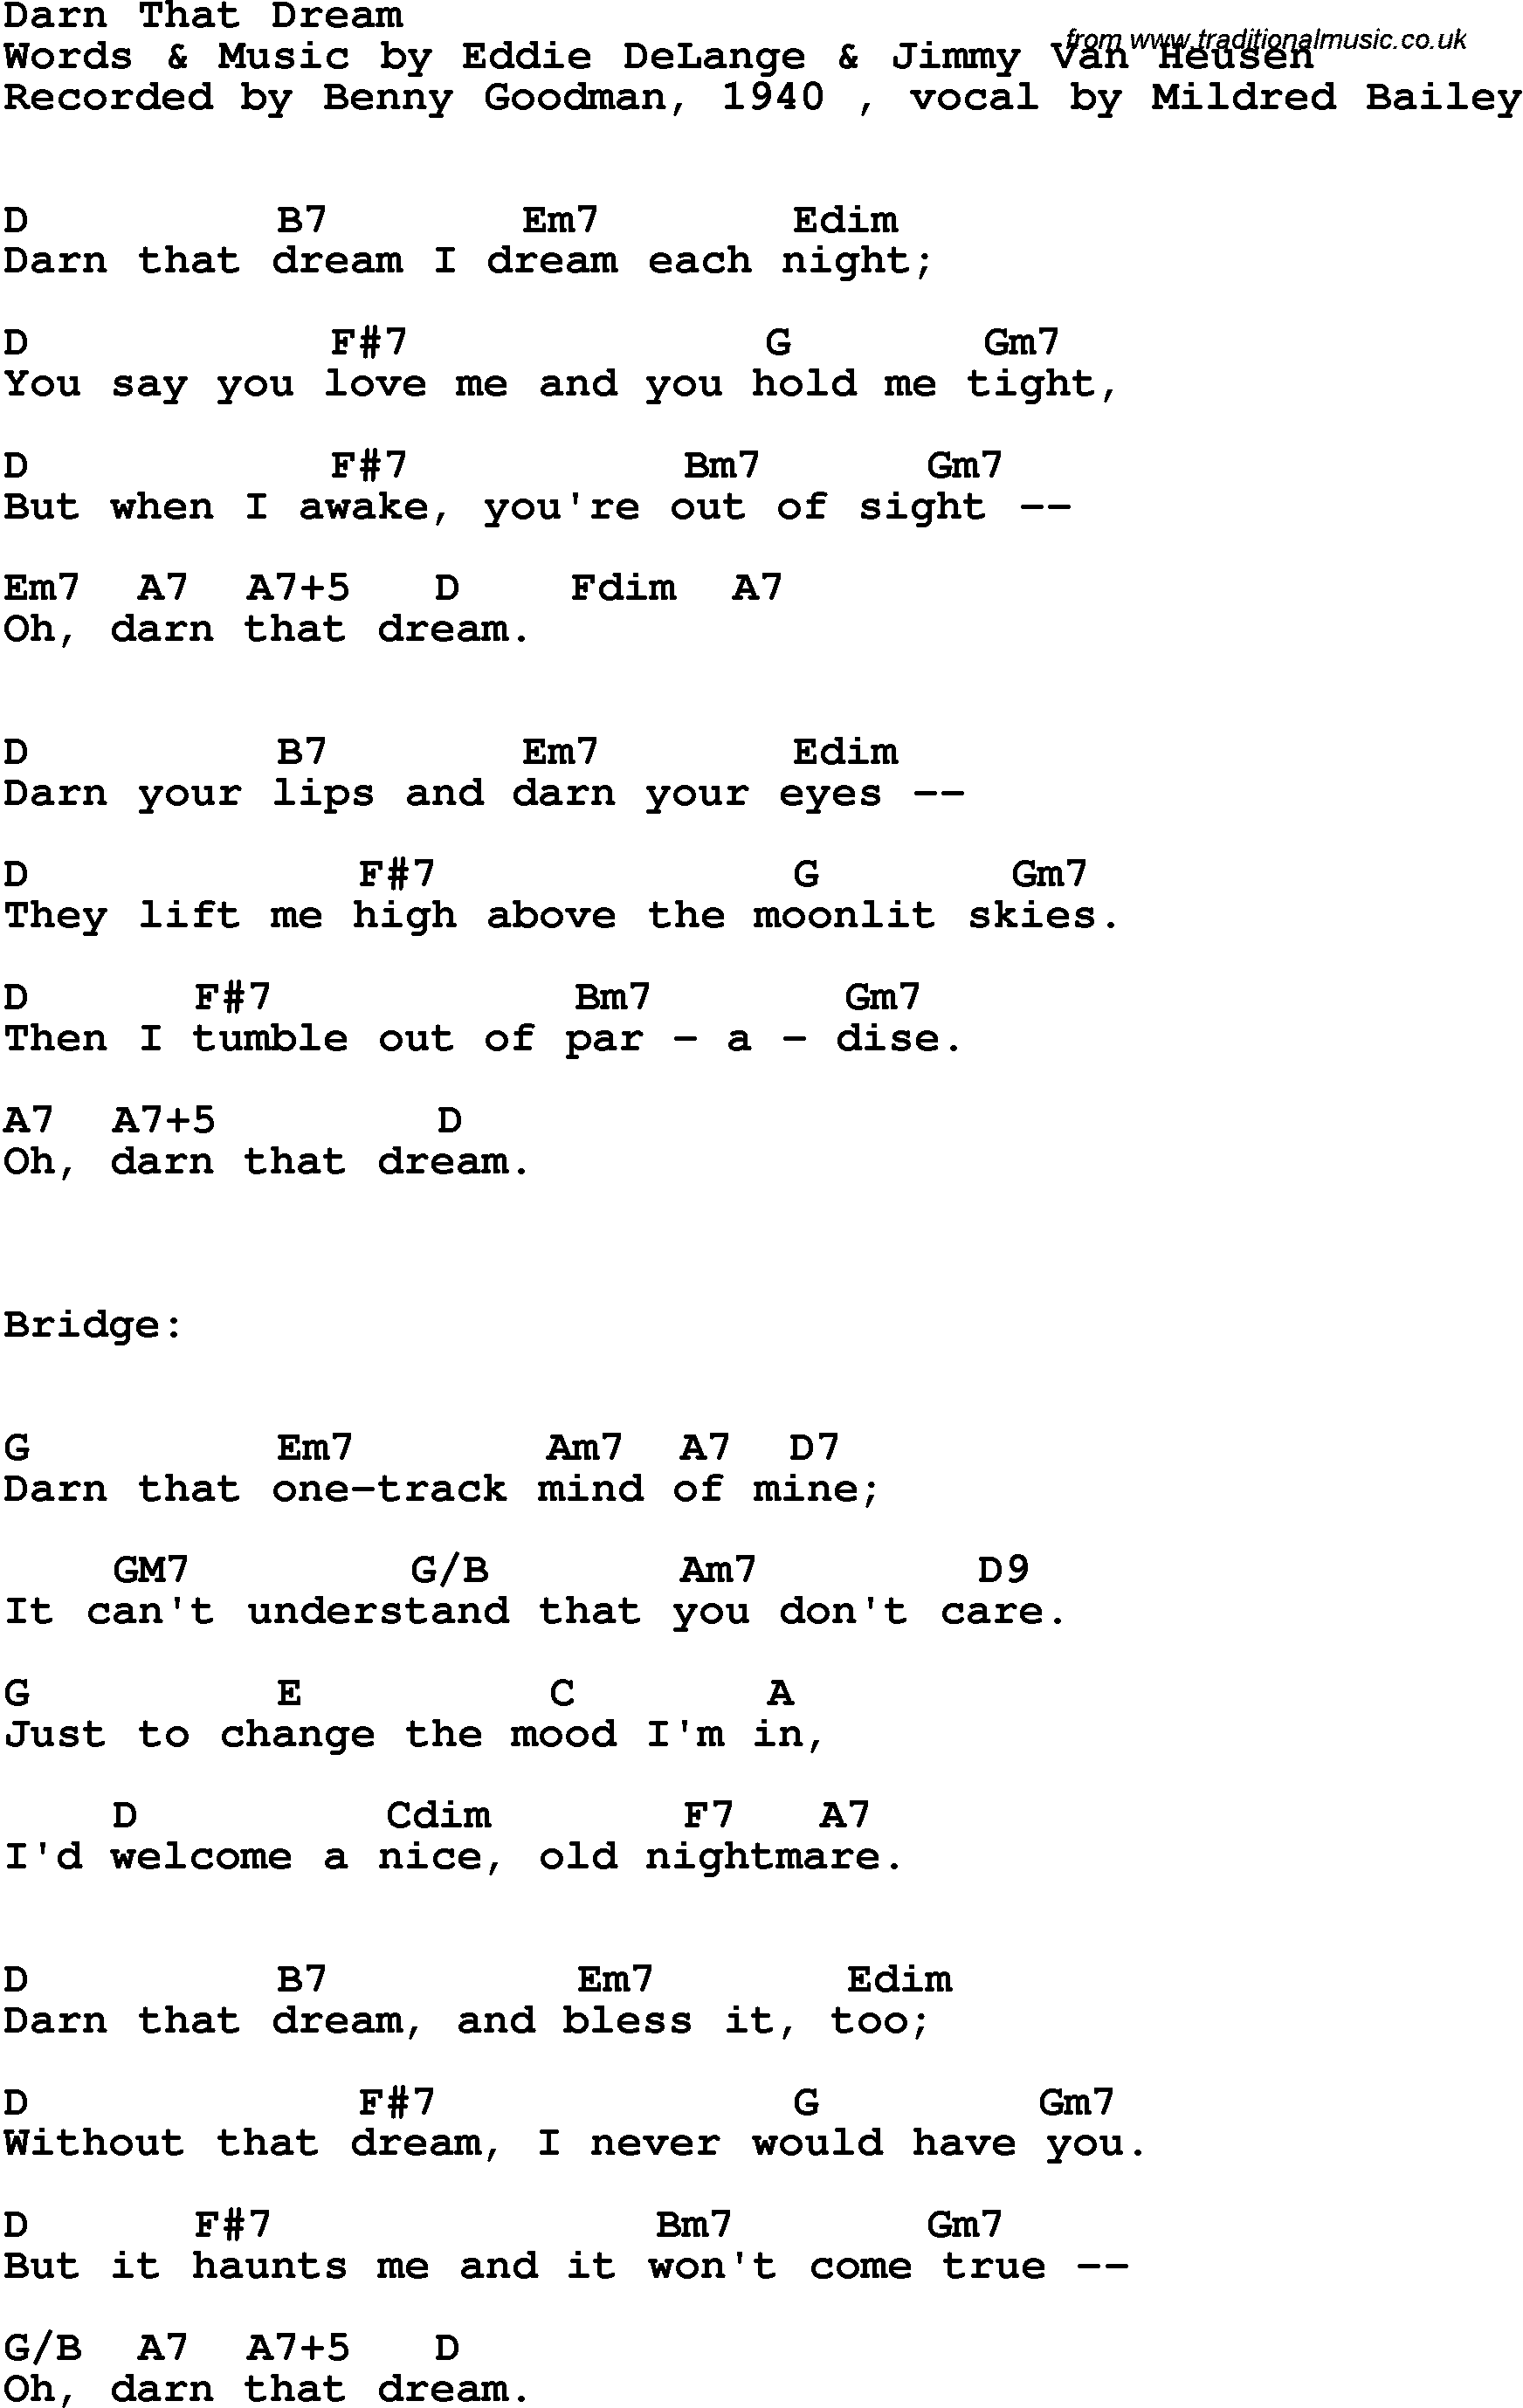 Song Lyrics with guitar chords for Darn That Dream - Benny Goodman, 1940